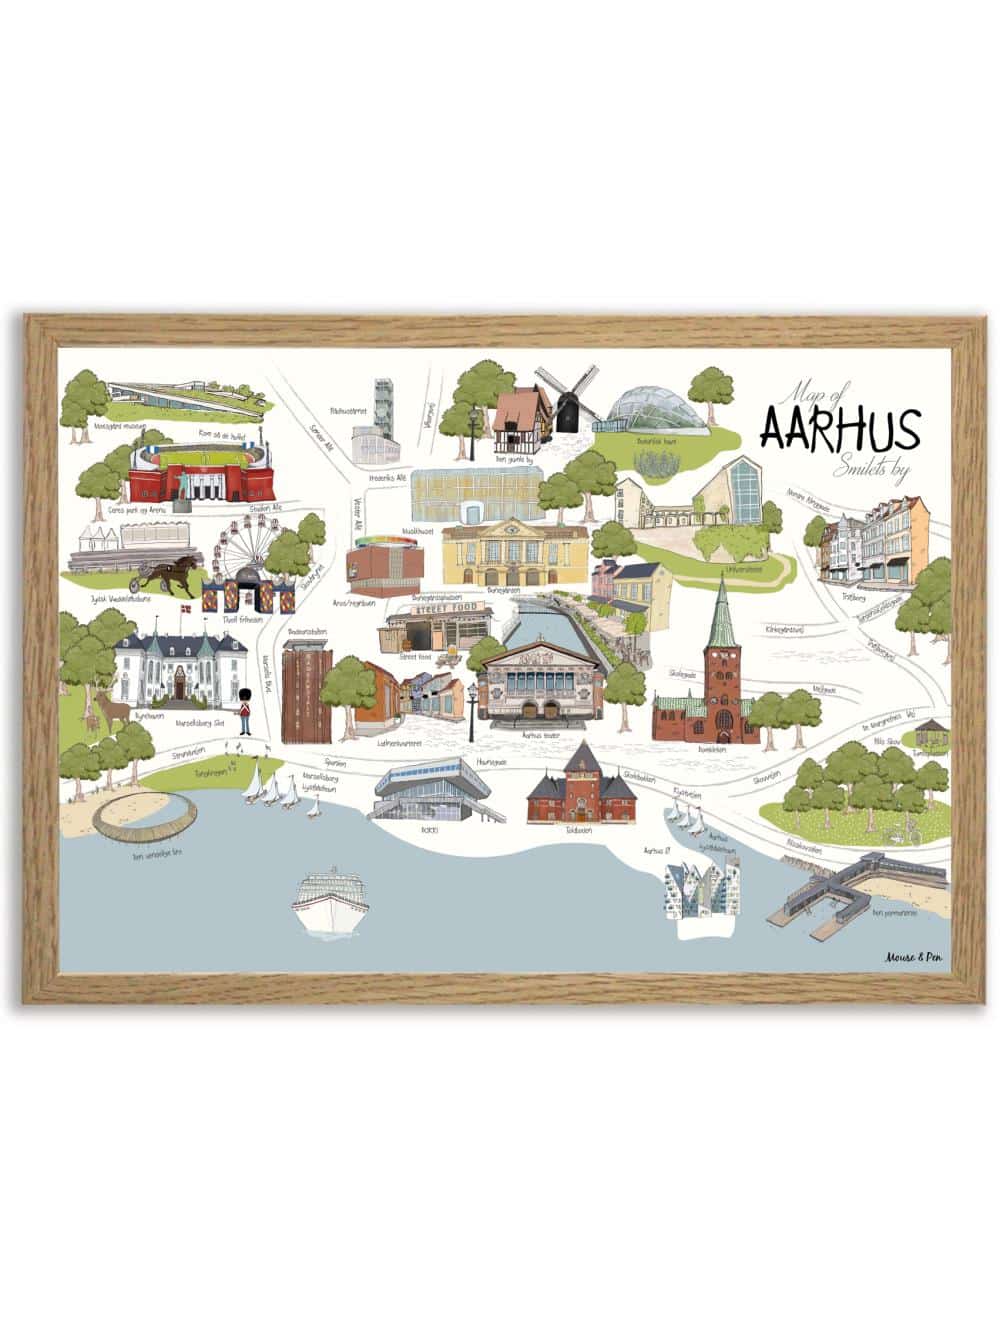 Map of Aarhus Mouseandpen